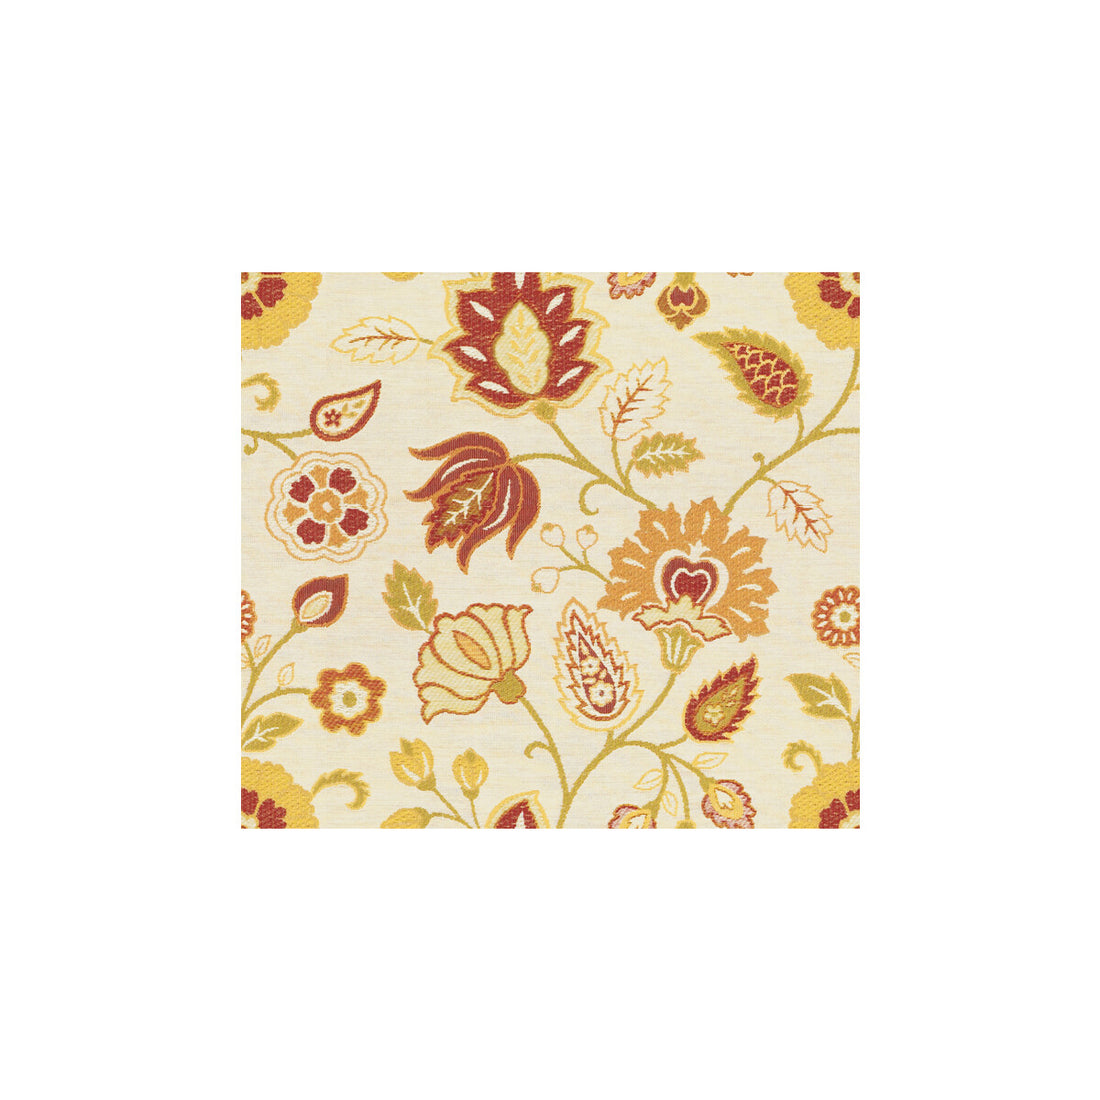 Kravet Design fabric in 31377-419 color - pattern 31377.419.0 - by Kravet Design in the Gis collection